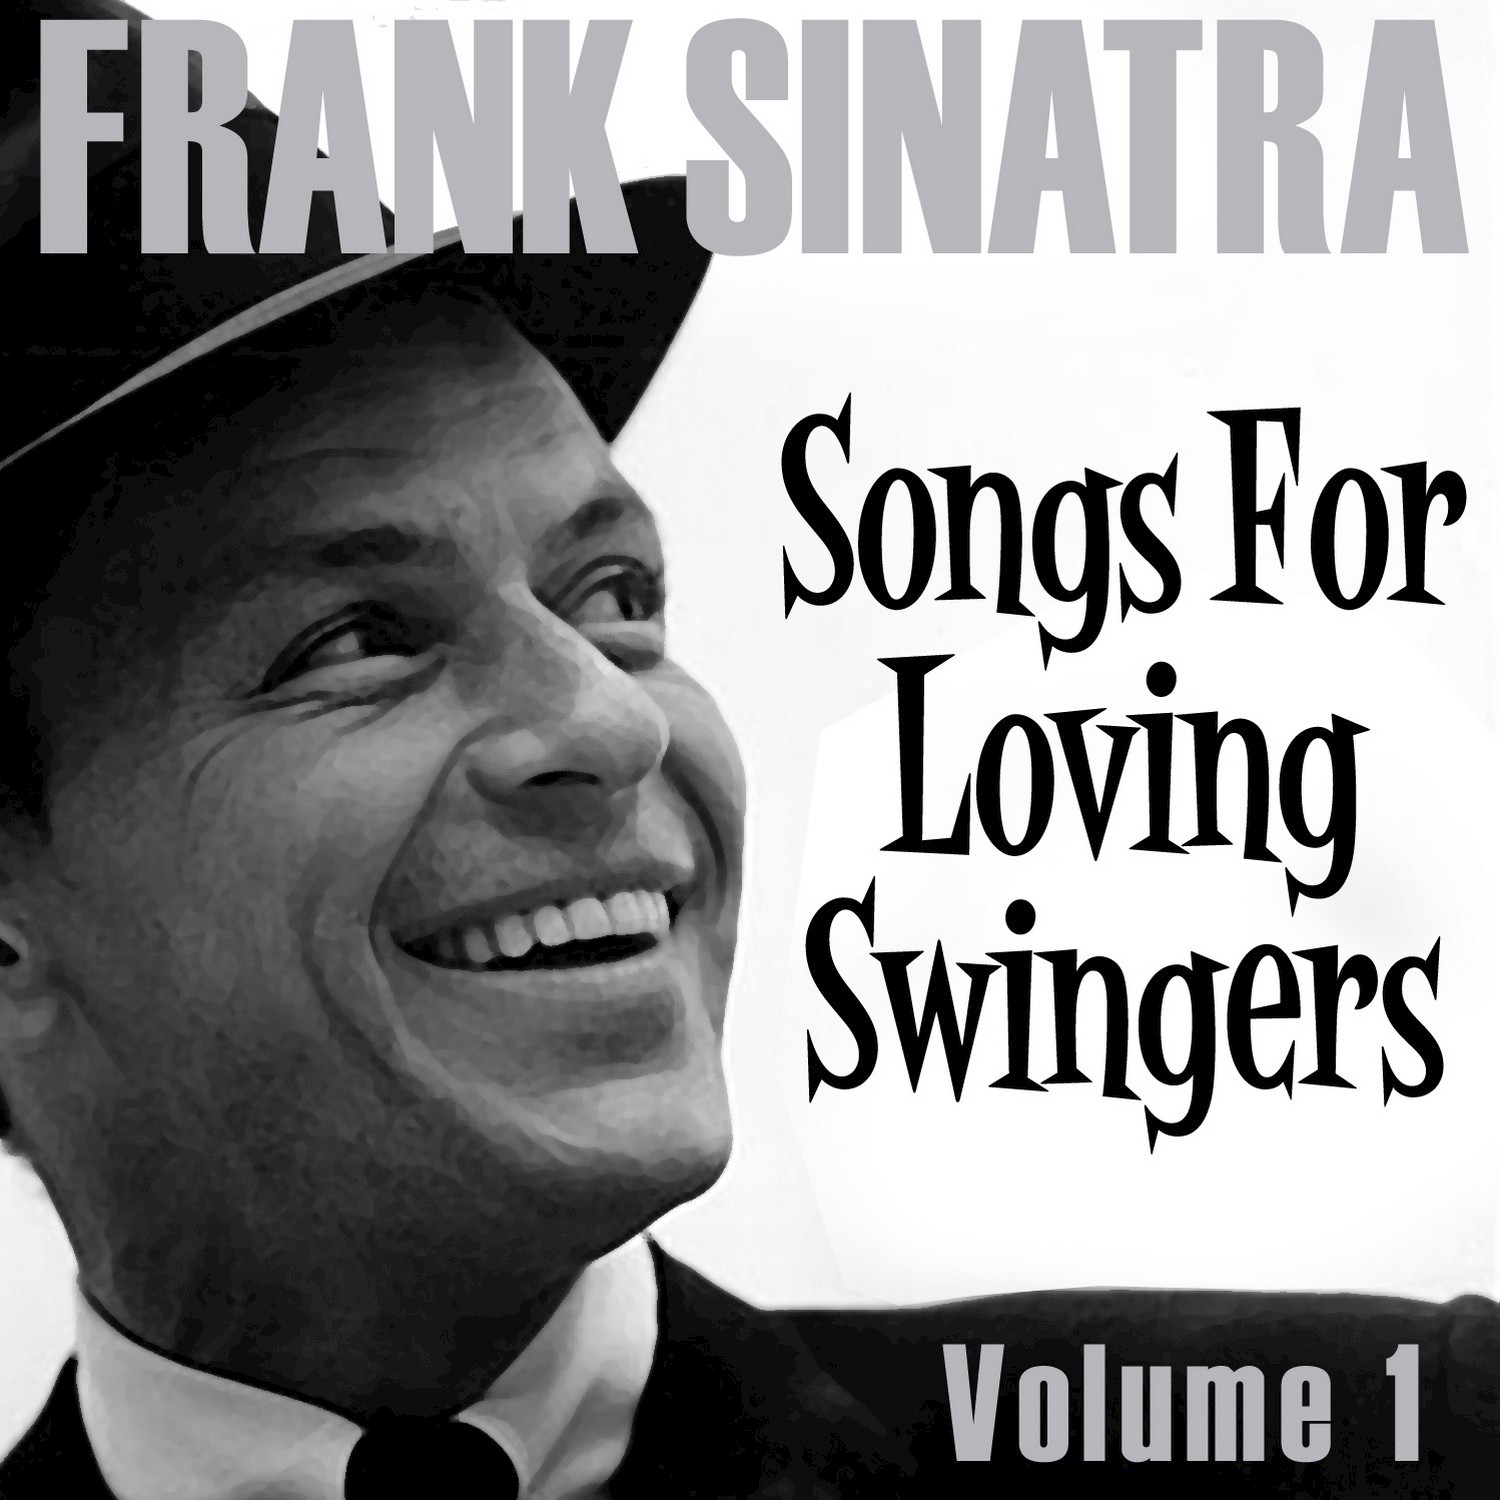 Frank Sinatra - Songs for Loving Swingers, Vol. 1